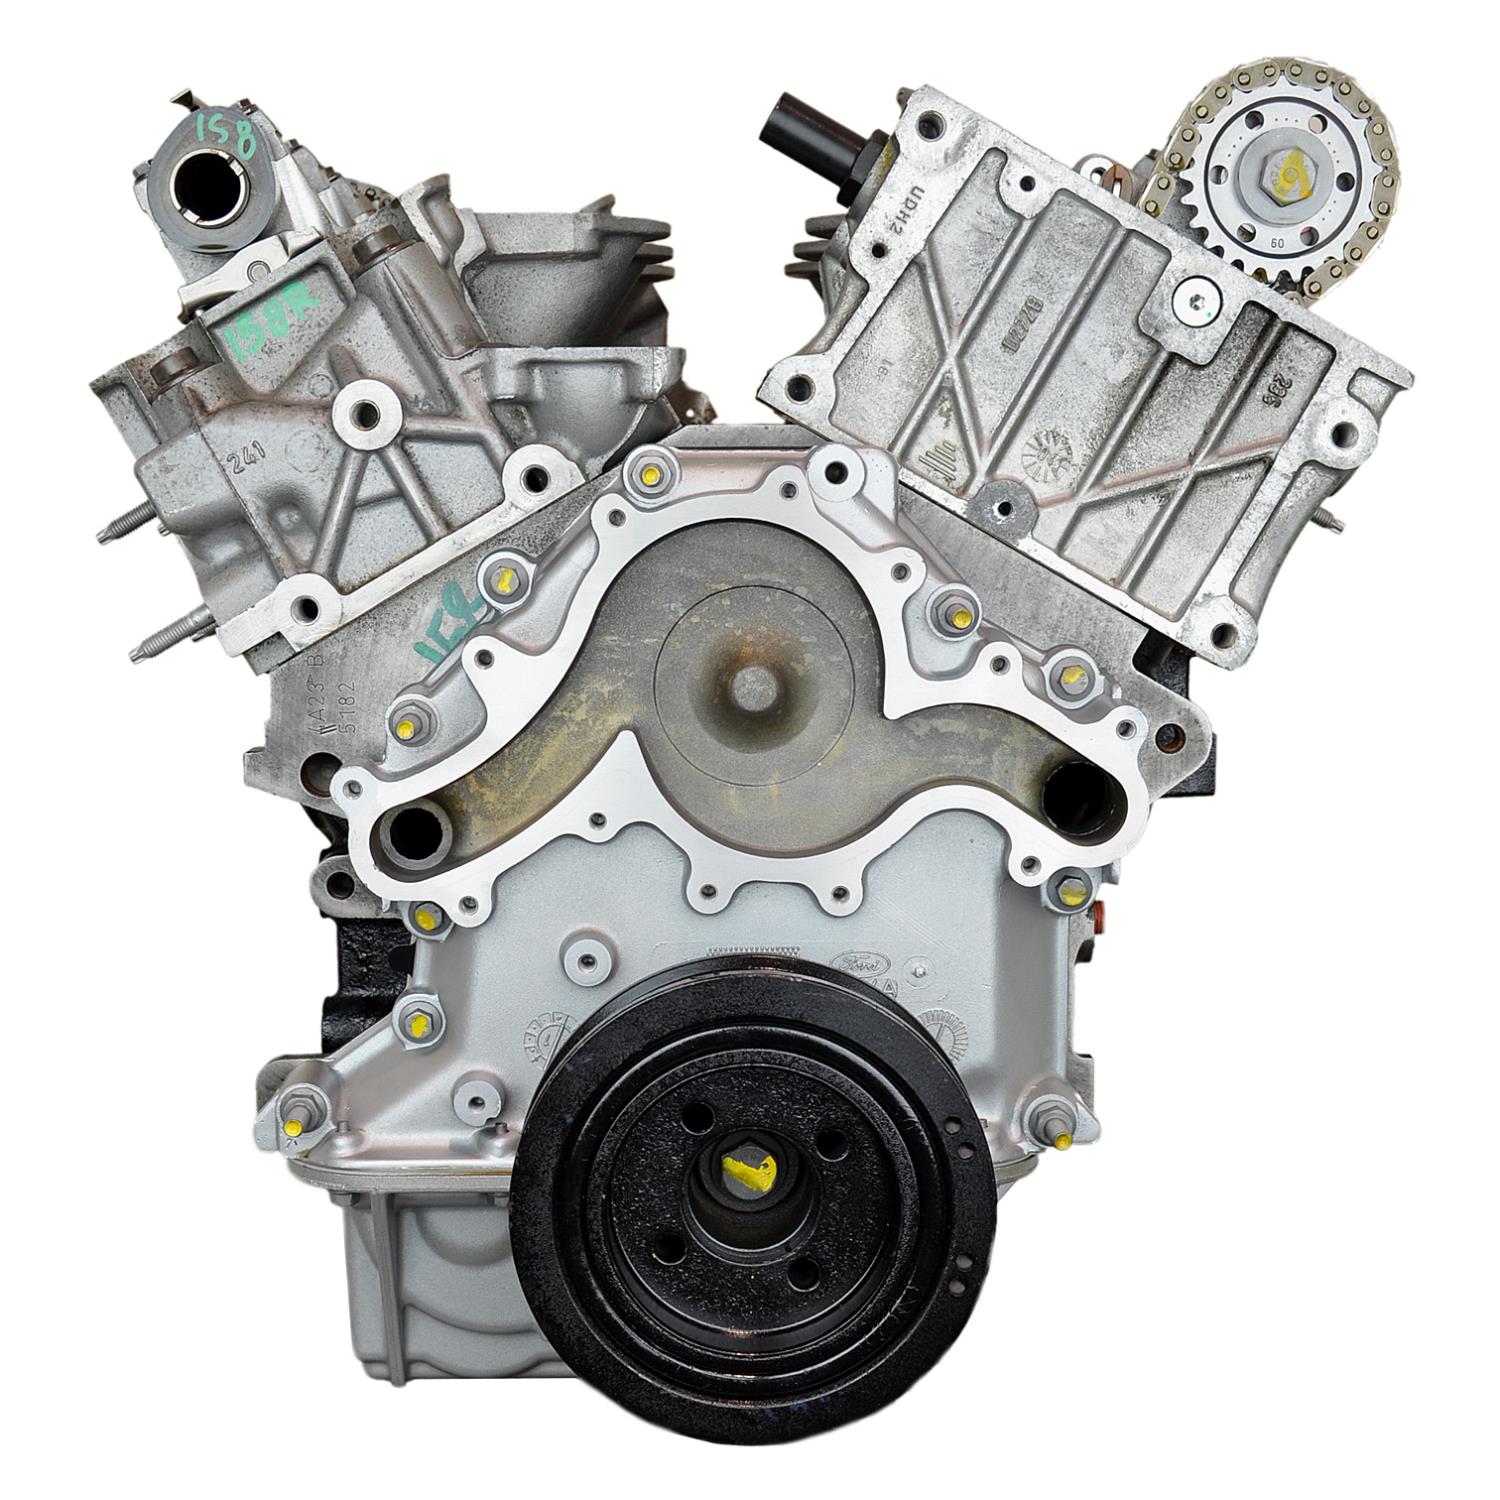 VFKE Remanufactured Crate Engine for 2001-2007 Ford Explorer & Ranger with 4.0L V6